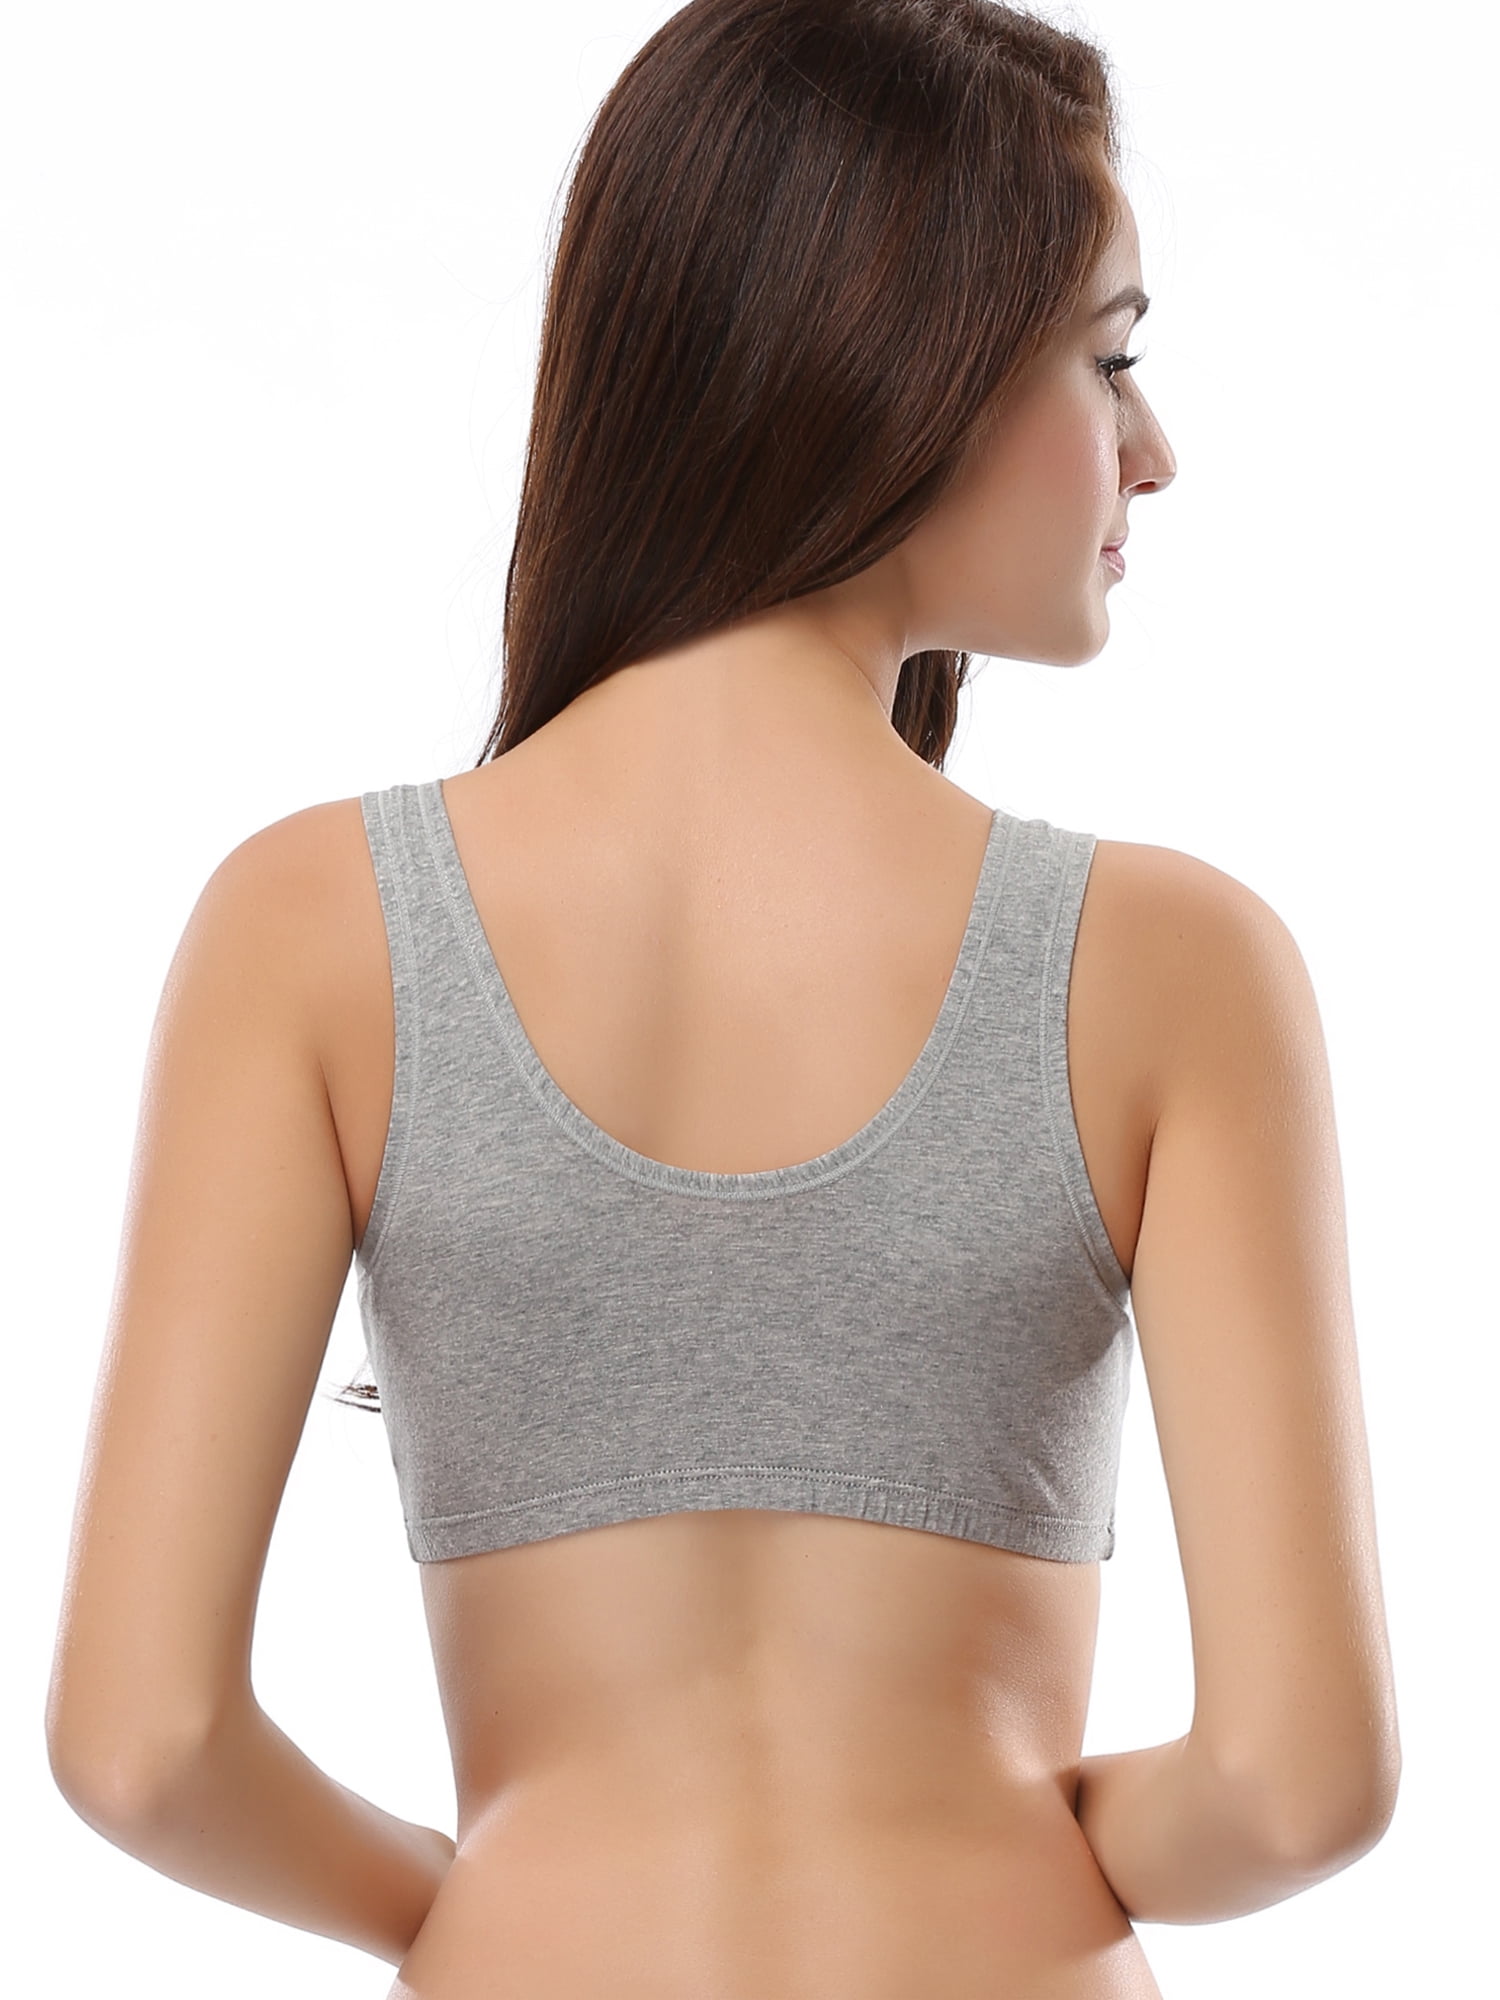 LELINTA Women's Breathable Cotton Racerback Sports Bra High Impact Support  Workout Yoga Bra Size M-L 